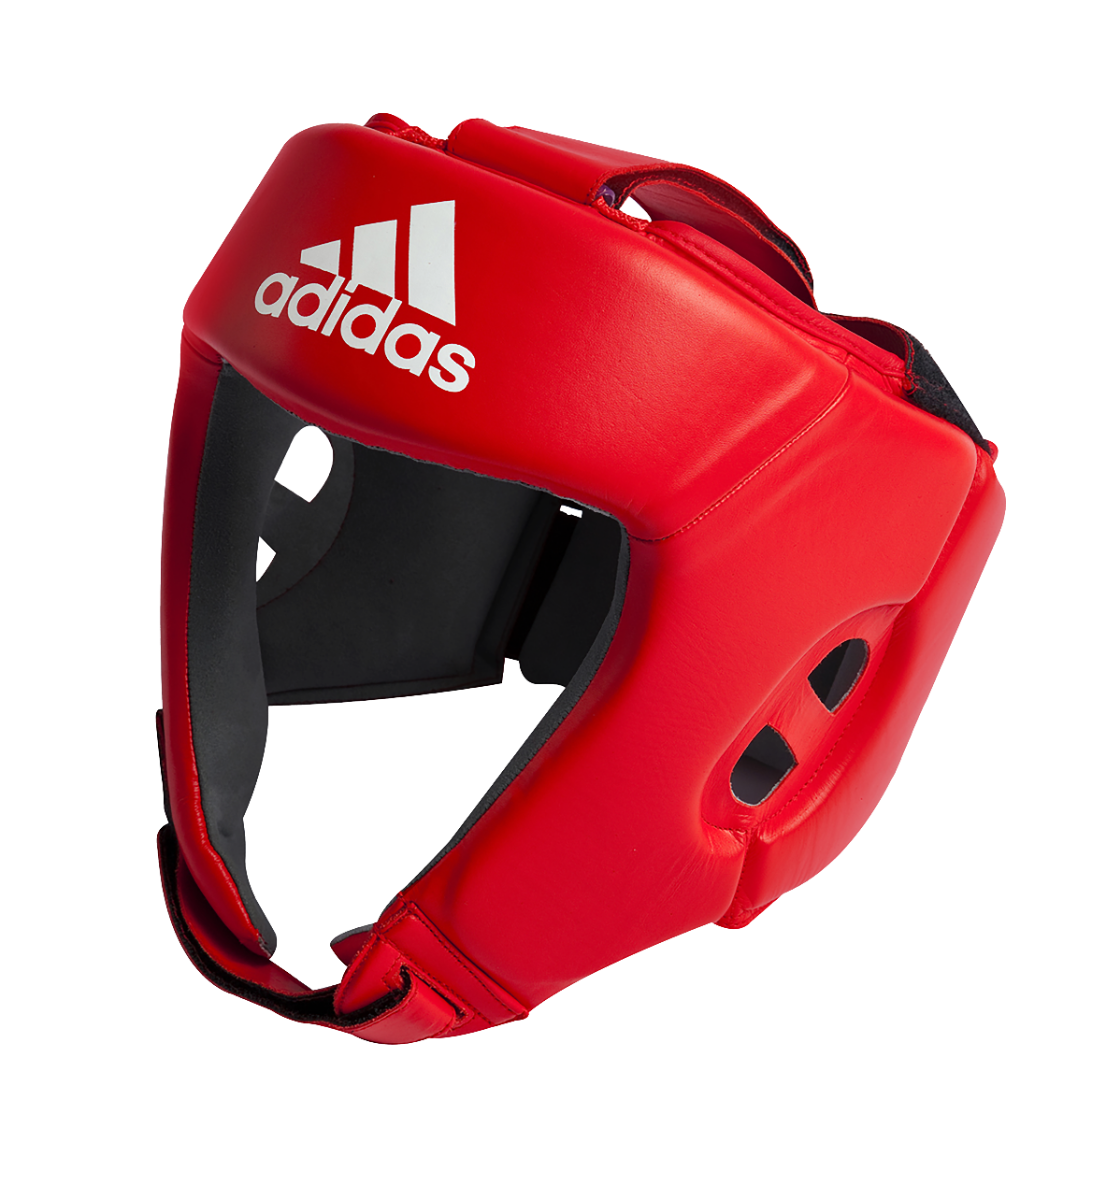 Adidas AIBA Approved Headguard